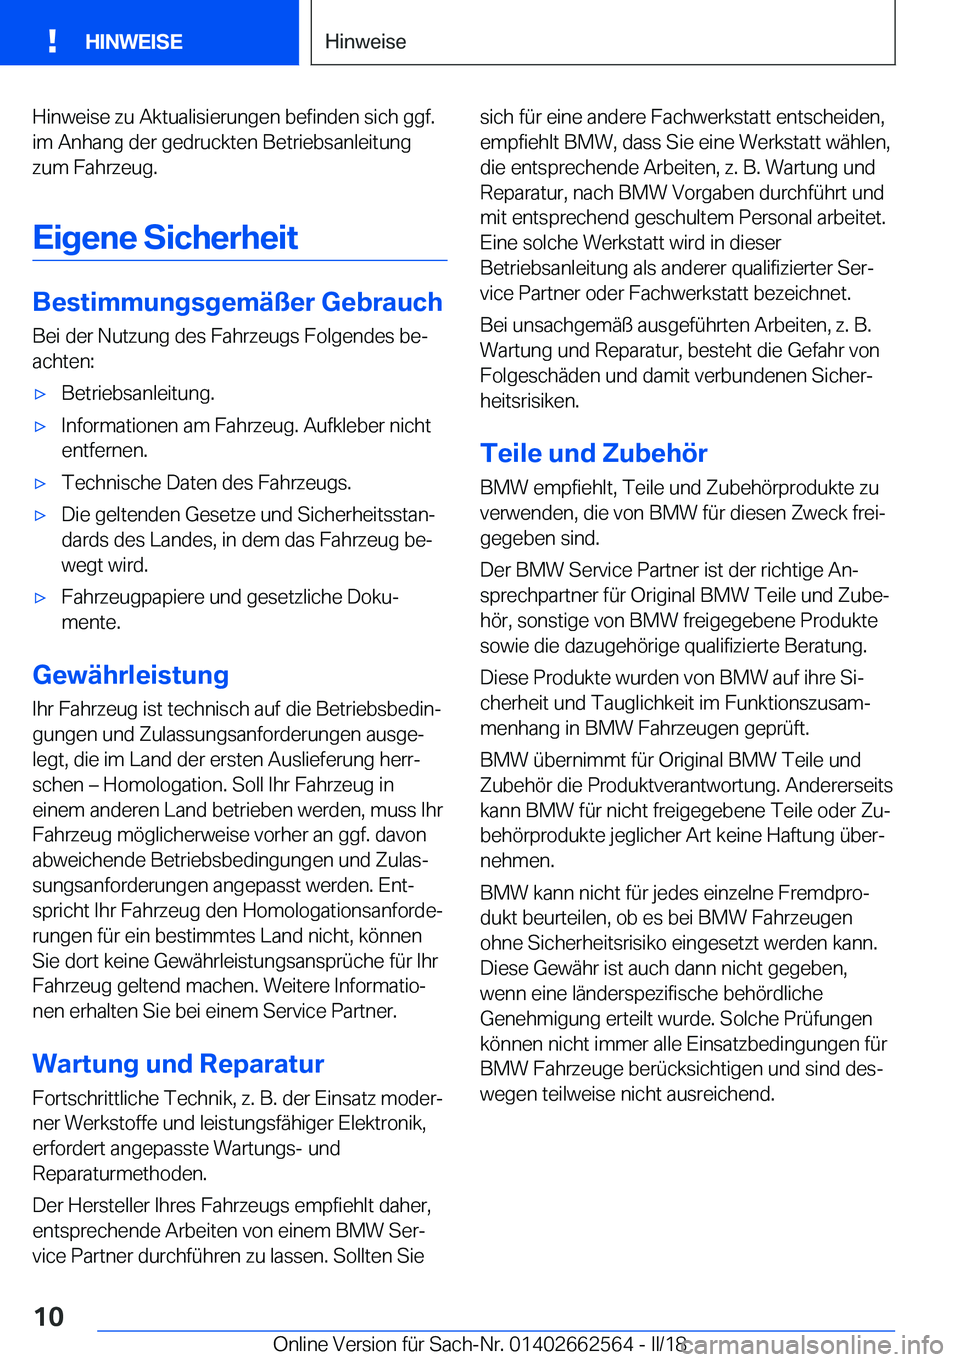 BMW M2 2018  Betriebsanleitungen (in German) �H�i�n�w�e�i�s�e� �z�u� �A�k�t�u�a�l�i�s�i�e�r�u�n�g�e�n� �b�e�f�i�n�d�e�n� �s�i�c�h� �g�g�f�.�i�m� �A�n�h�a�n�g� �d�e�r� �g�e�d�r�u�c�k�t�e�n� �B�e�t�r�i�e�b�s�a�n�l�e�i�t�u�n�g�z�u�m� �F�a�h�r�z�e�u